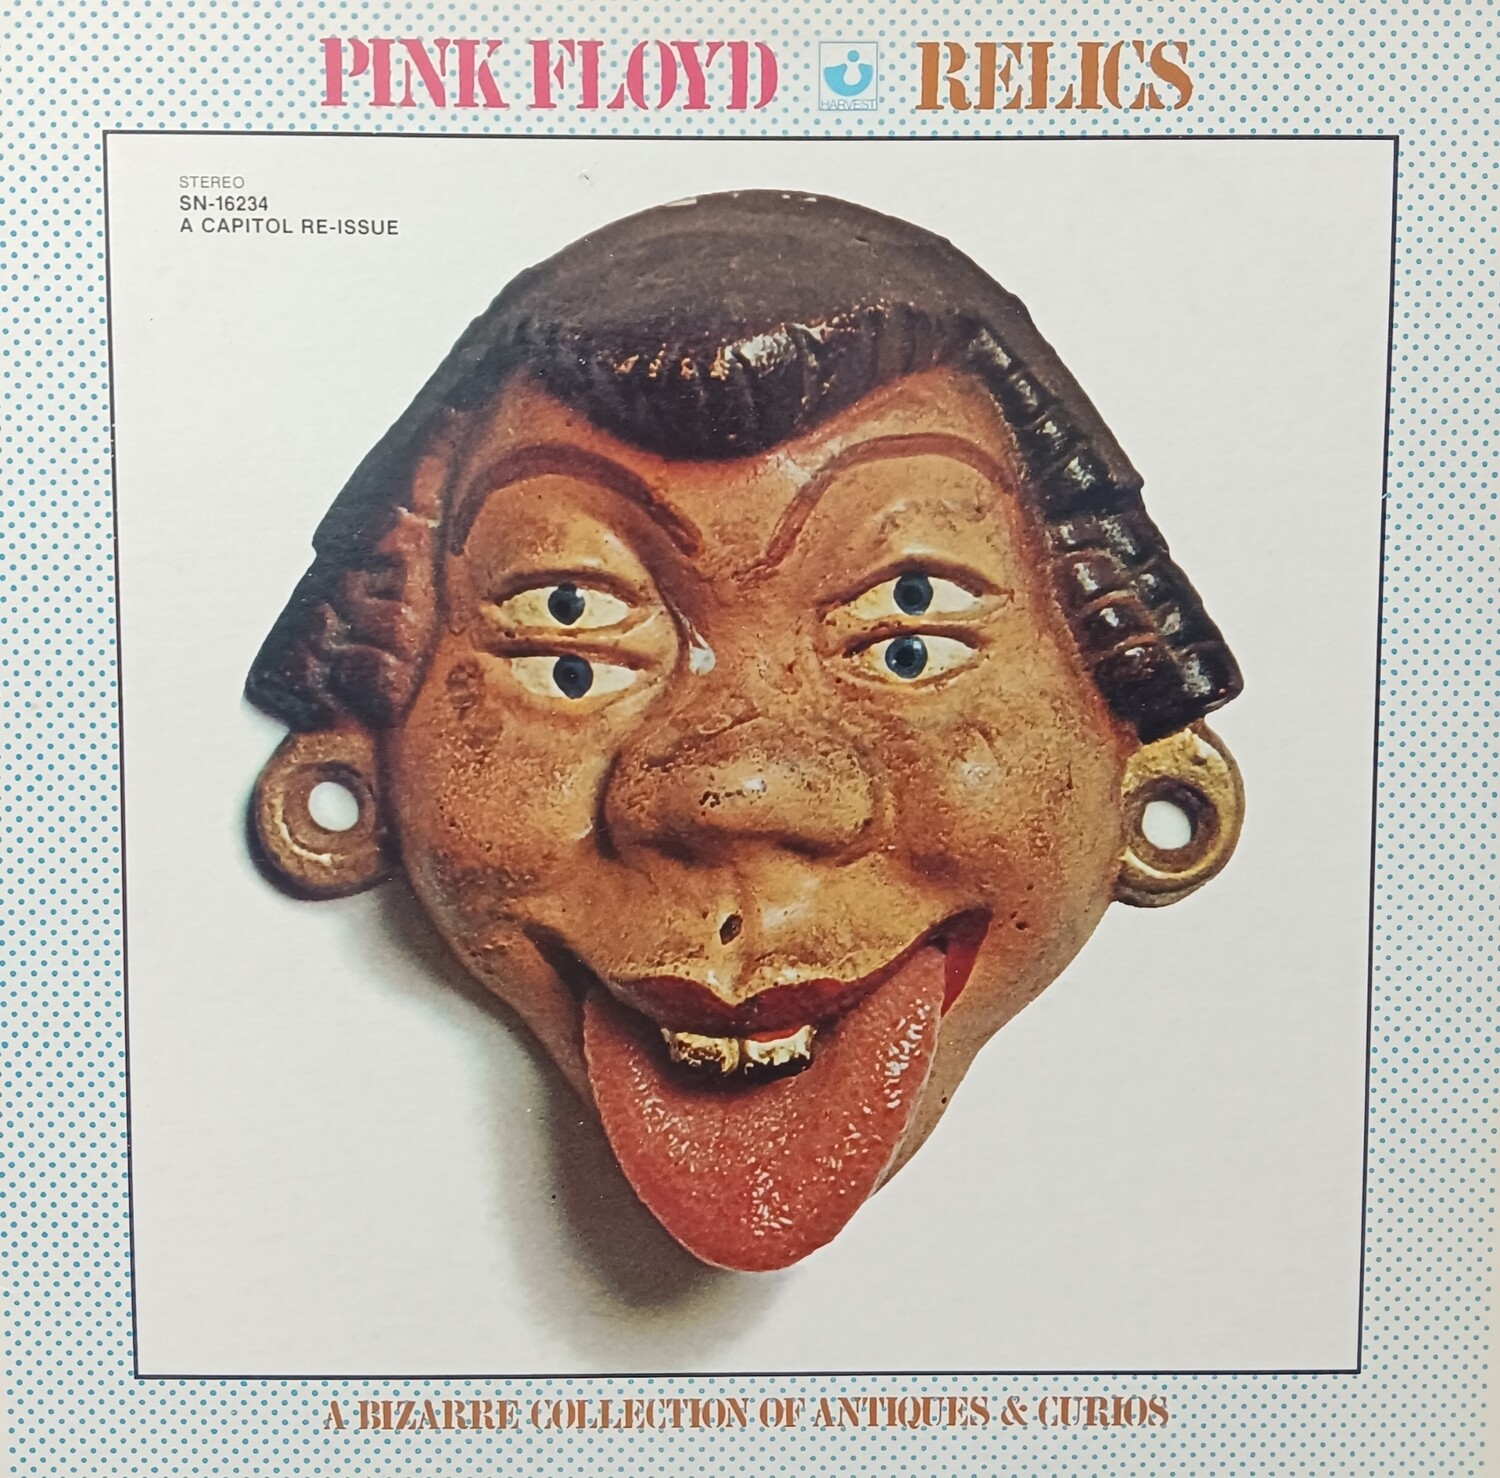 PINK FLOYD - Relics